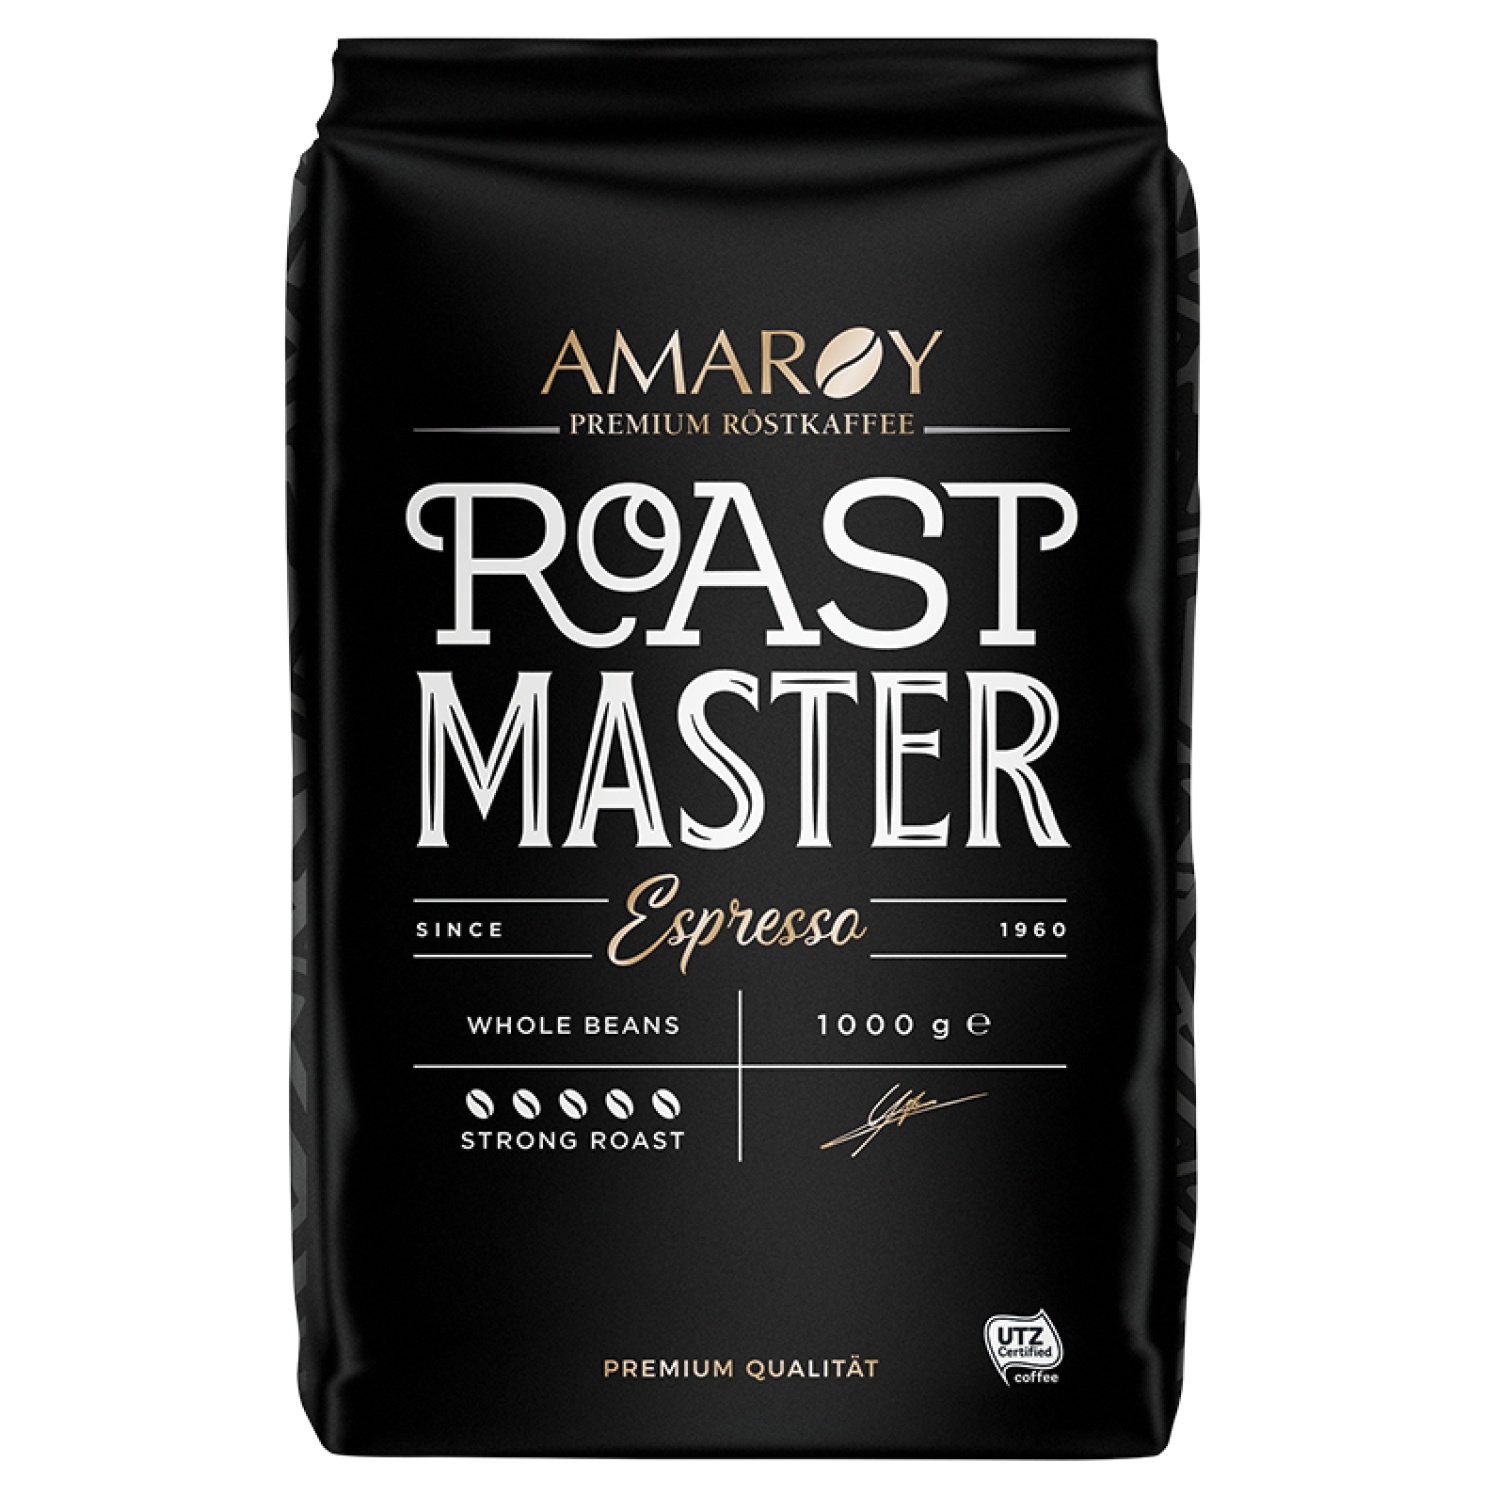 AMAROY Roastmaster 1kg